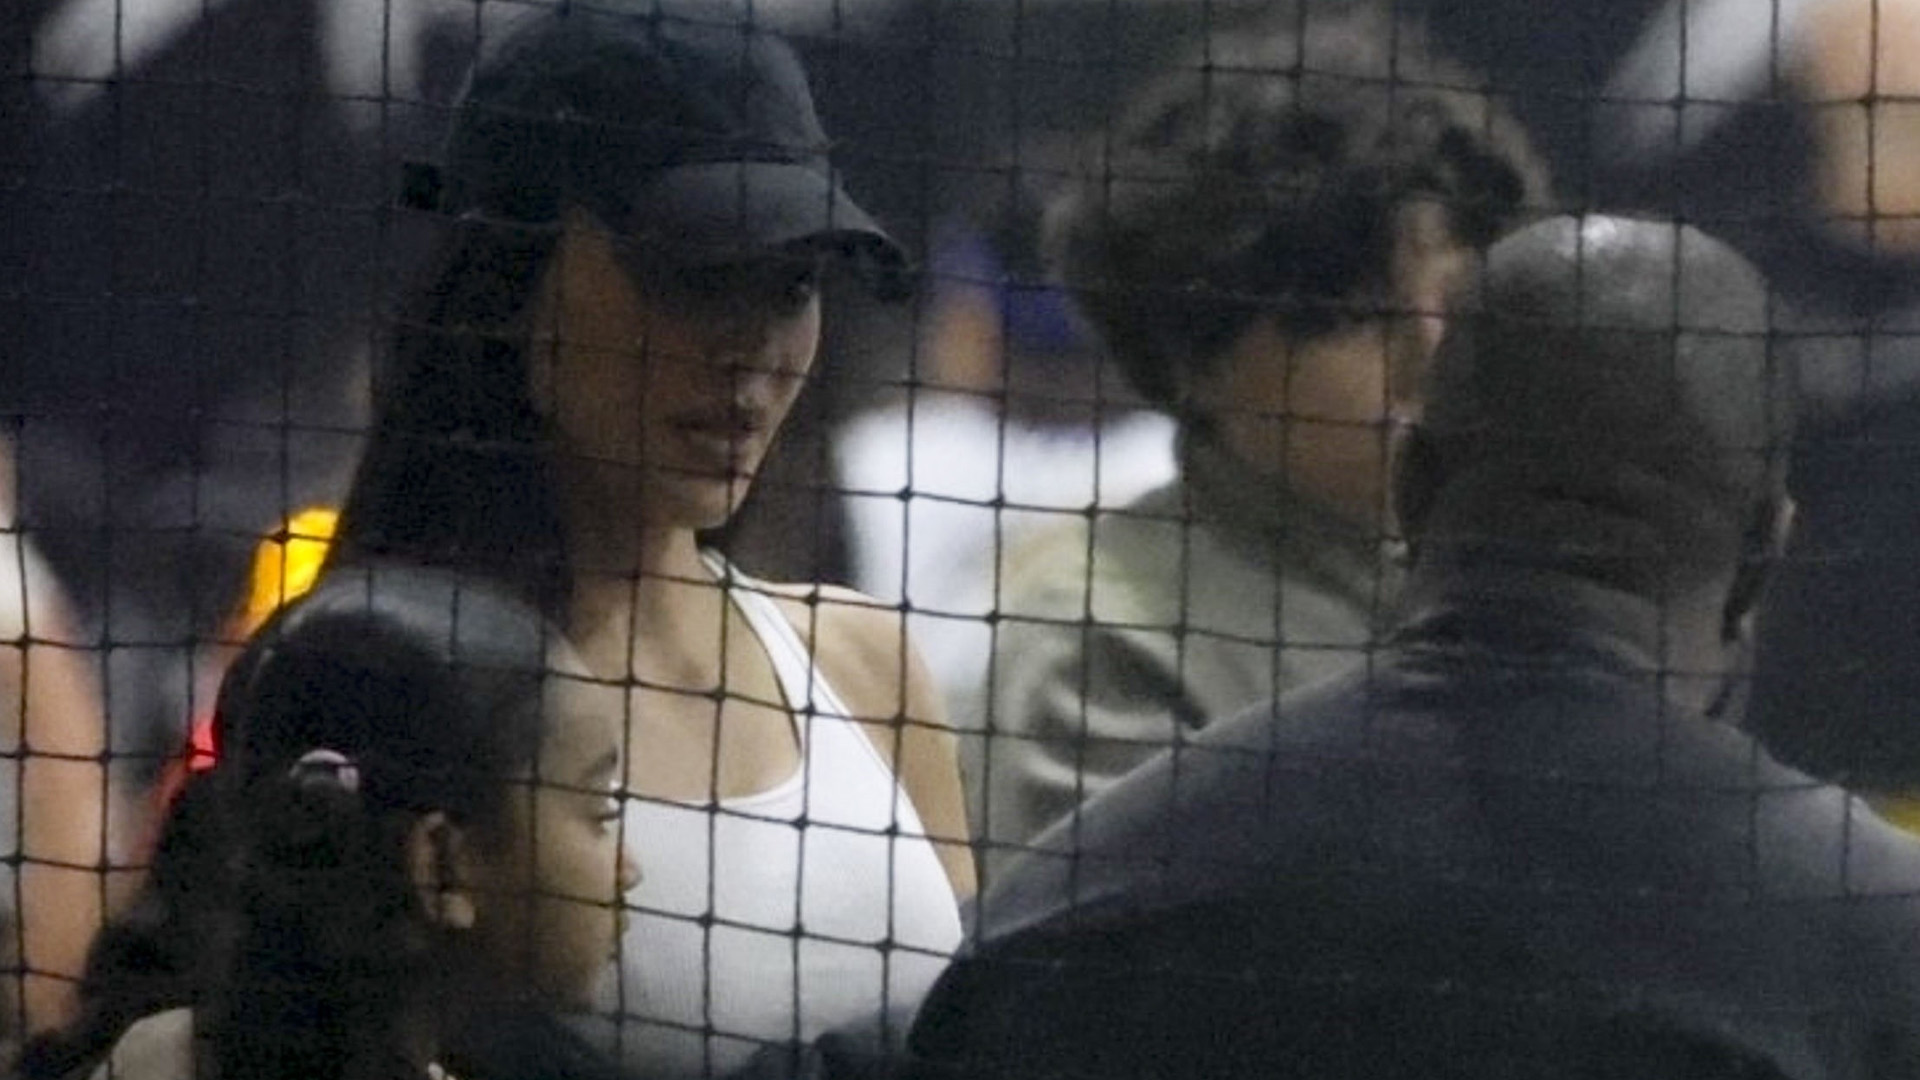 Kim Kardashian and Kanye West’s tension escalates at son Saint’s basketball game in LA – a shocking family showdown!